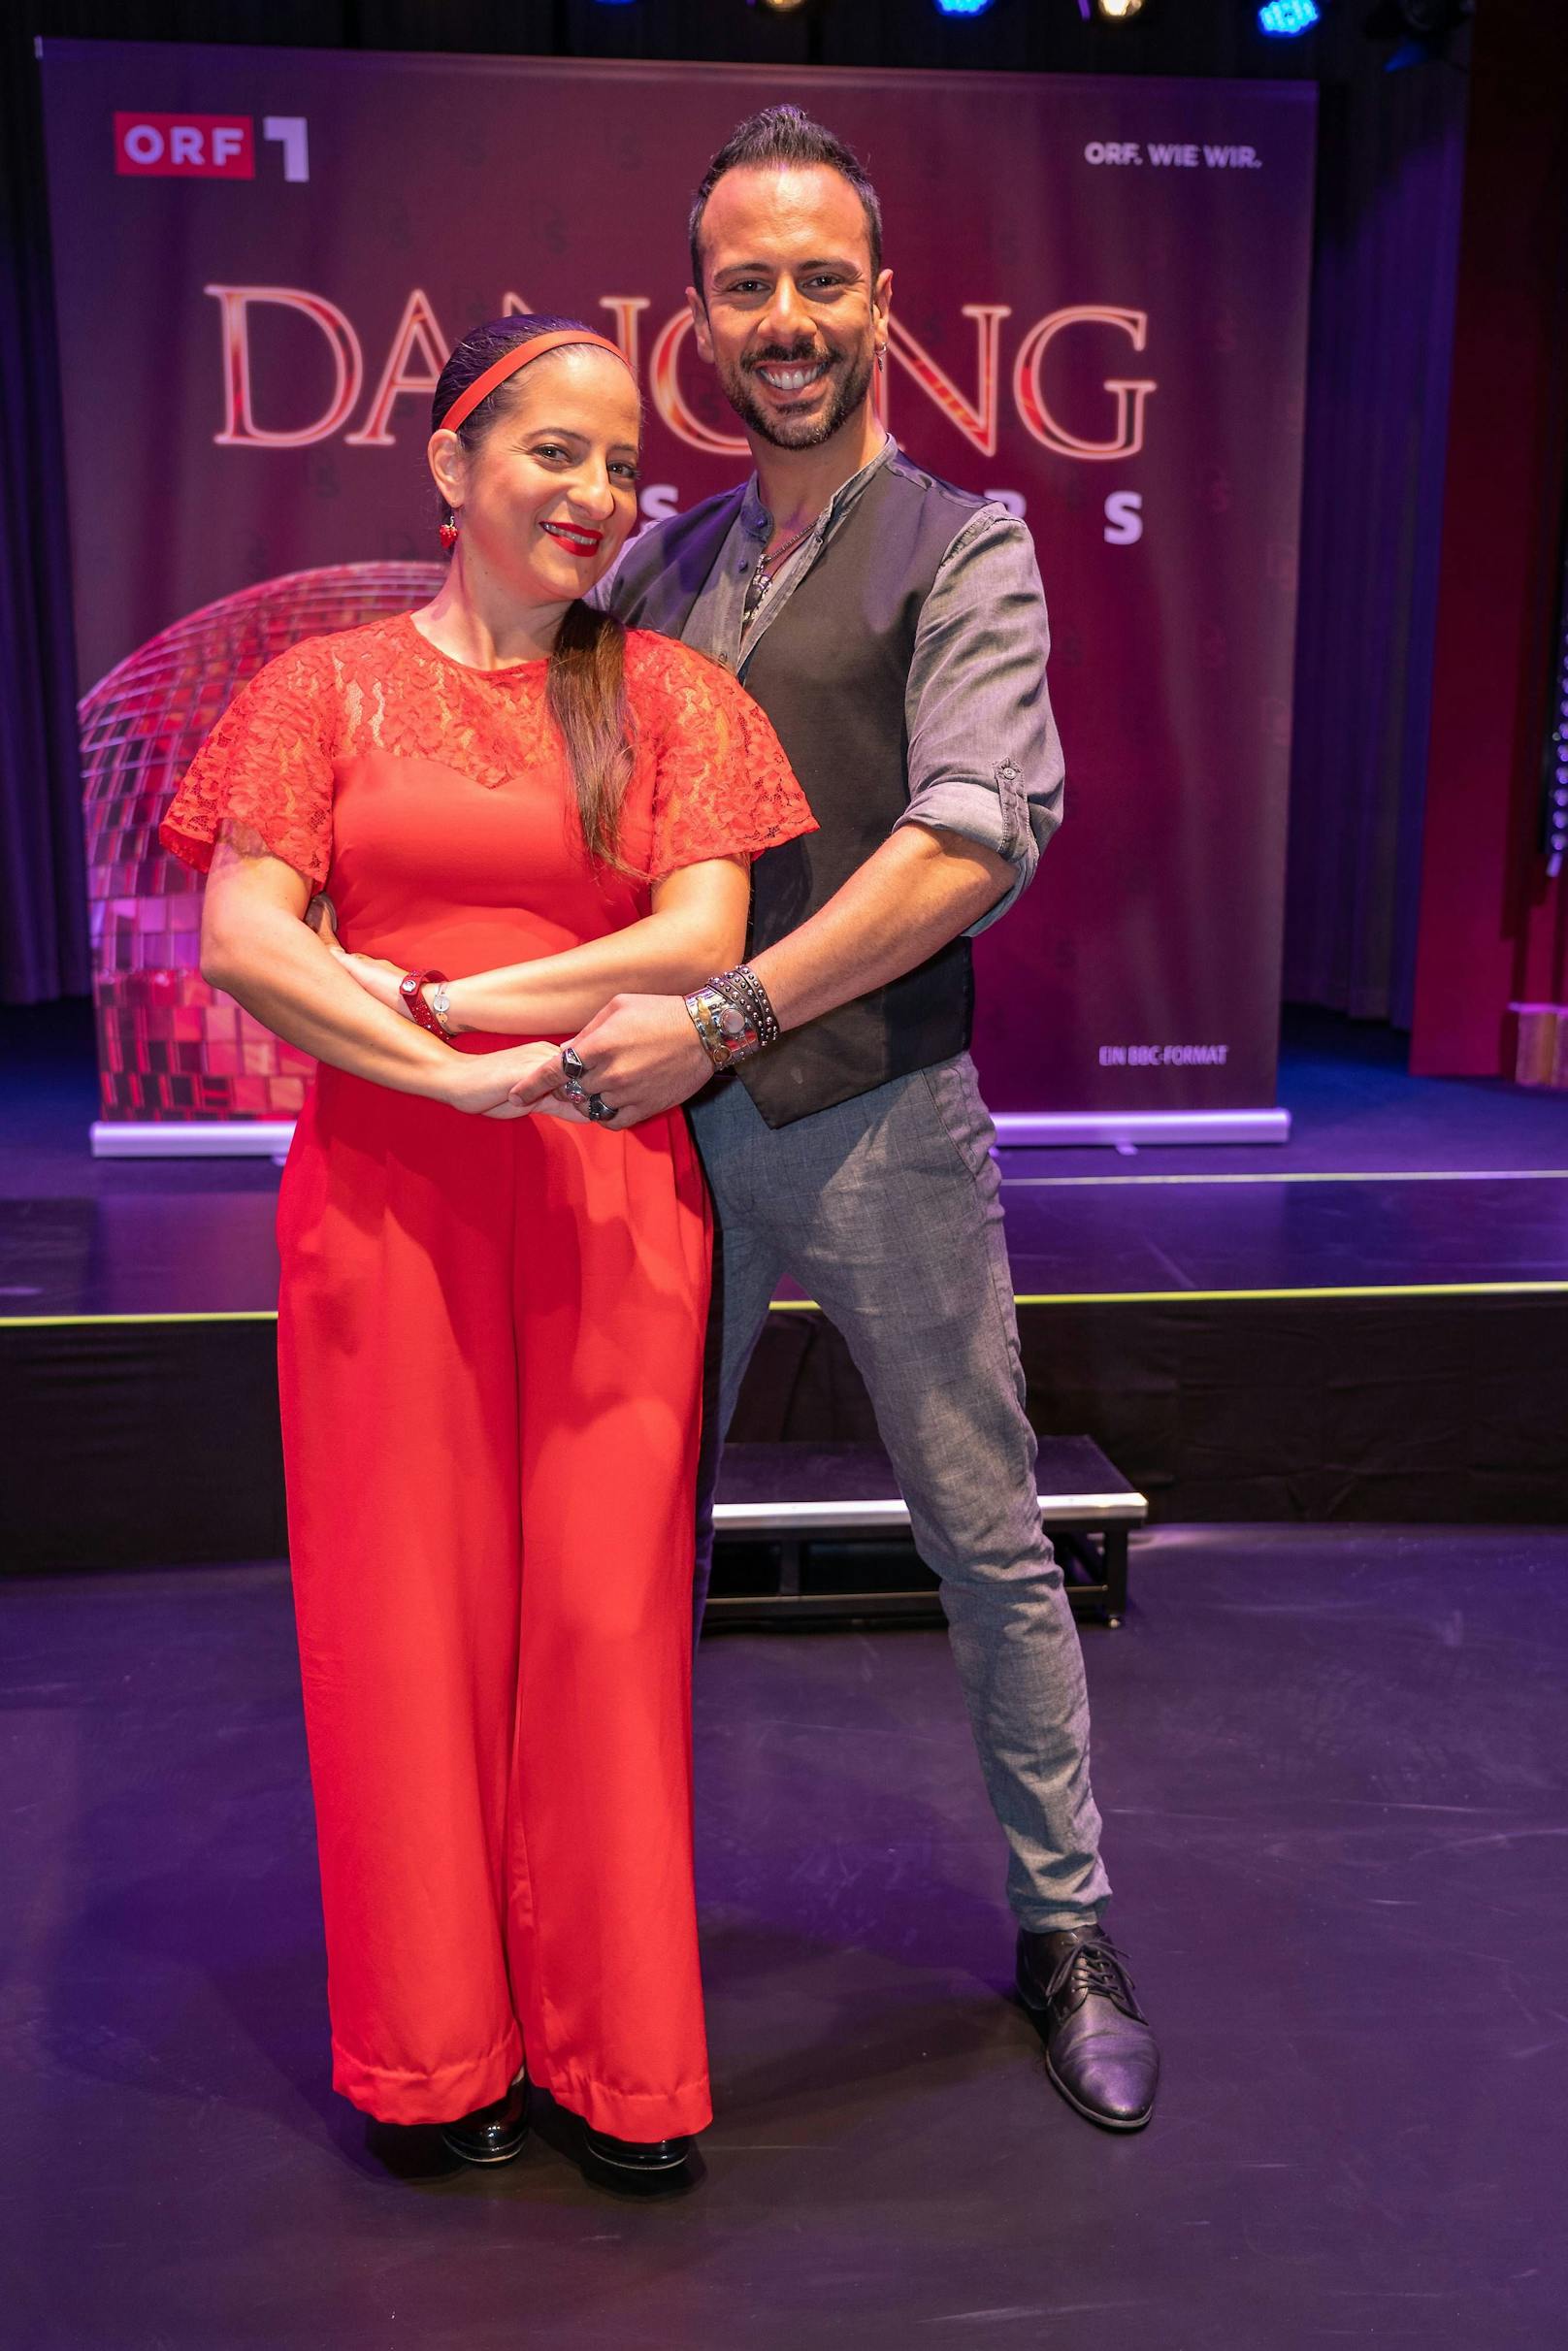 Caroline Athanasiadis und Danilo Campisi tanzen ab 24. September im ORF-Ballroom